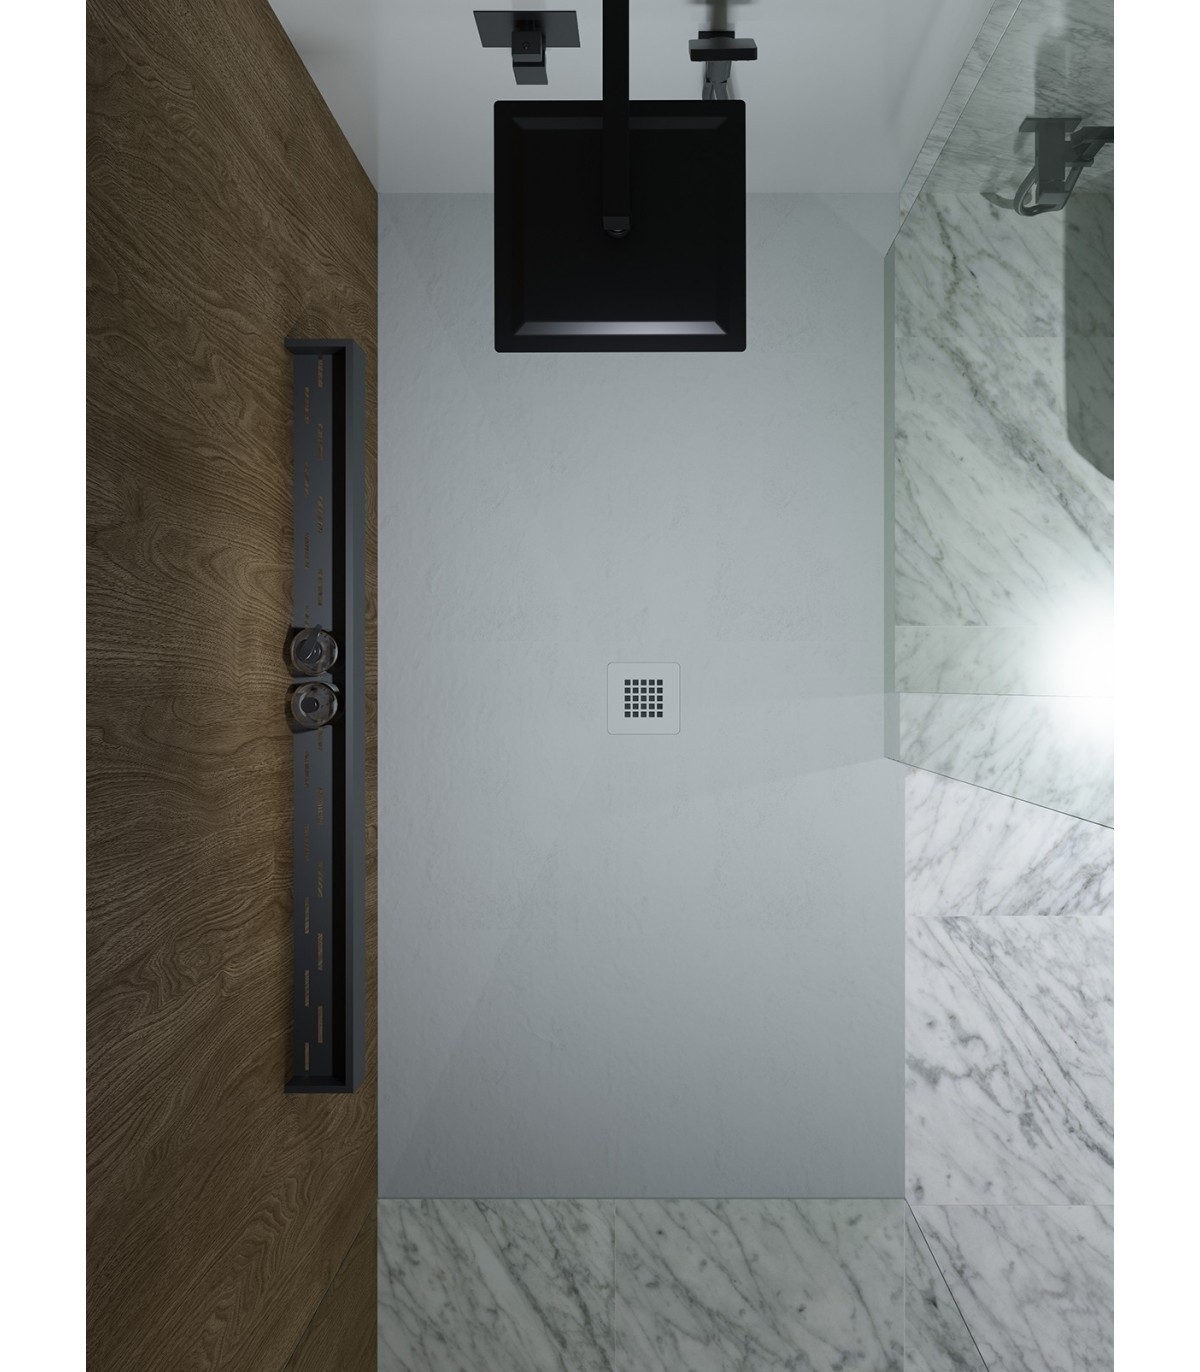 Plato de ducha blanco con marco medida 90x140 cm